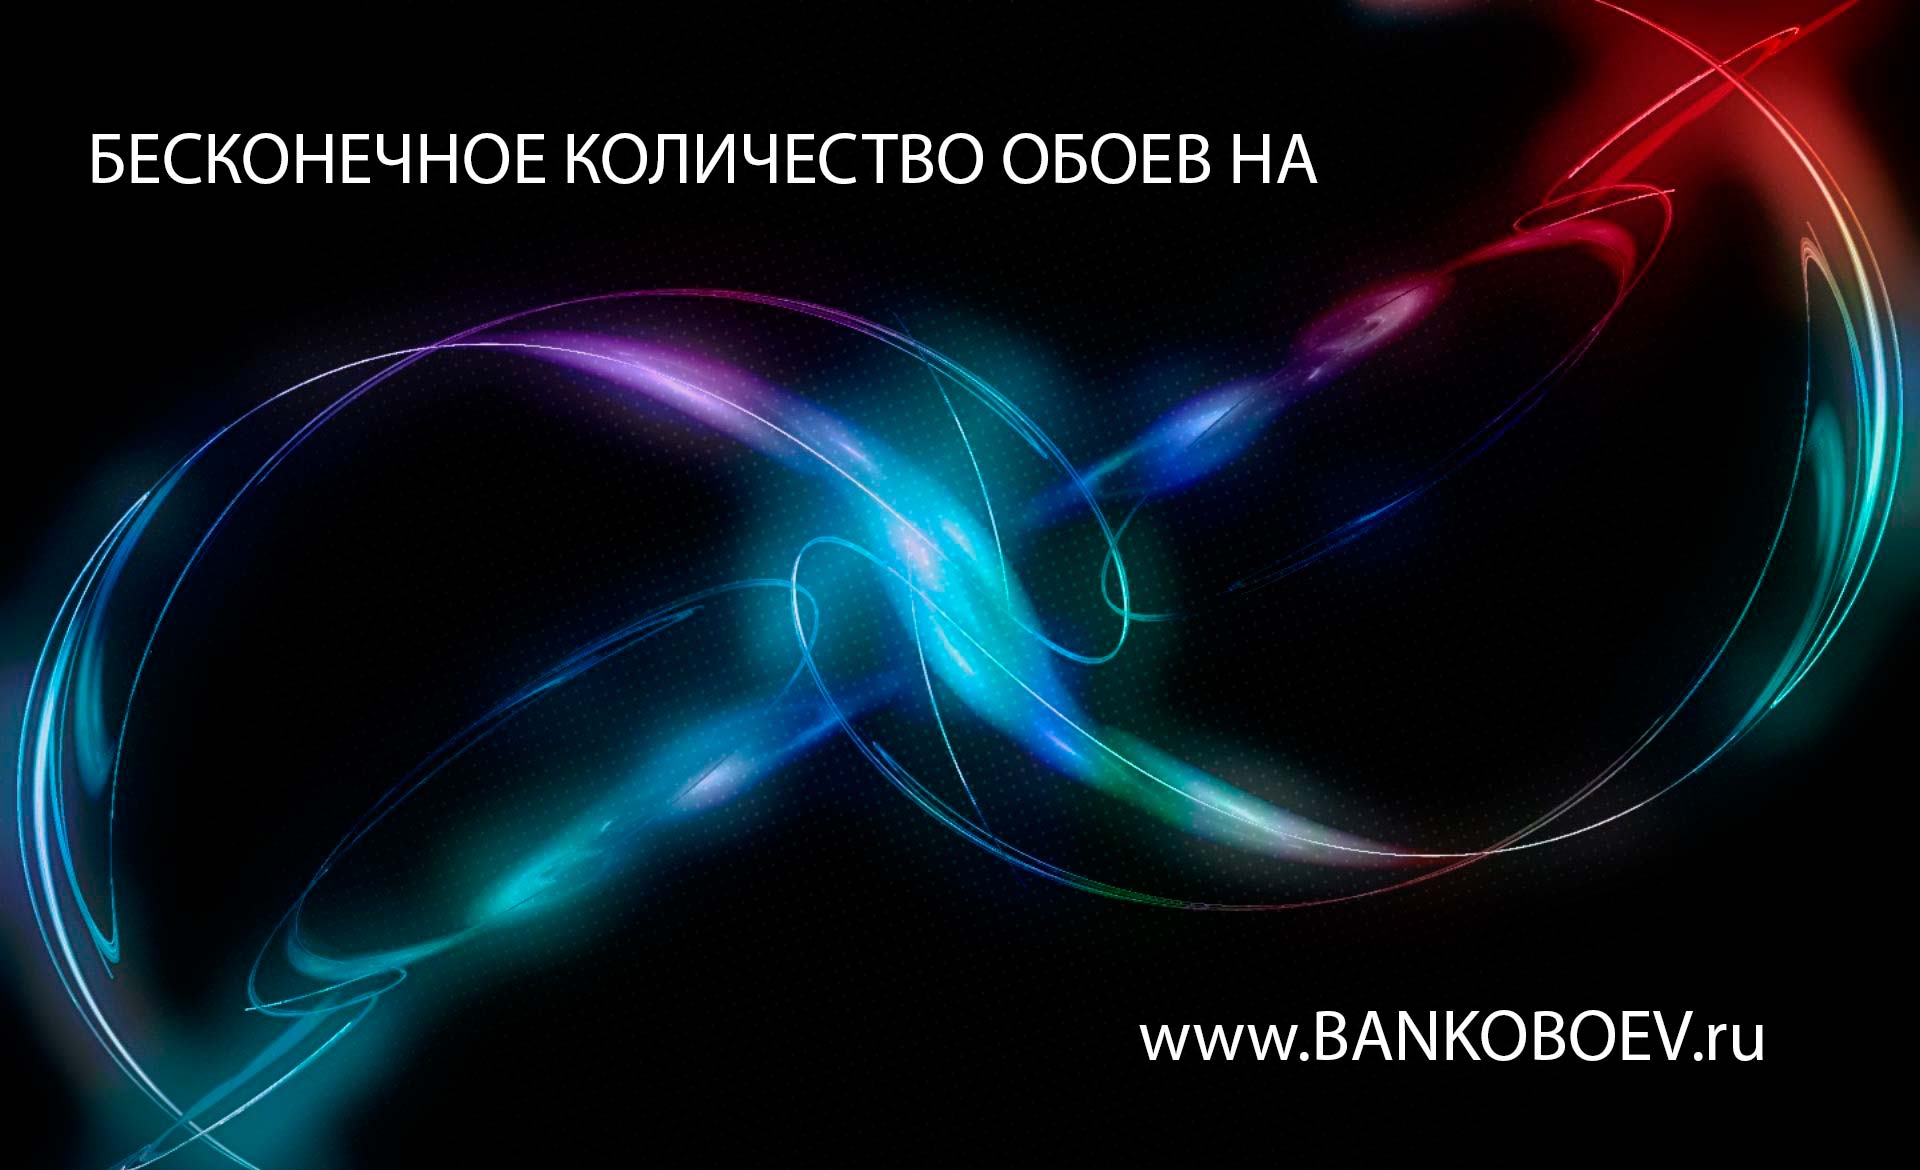 Source Bankoboev Ru Image Odg2mtk